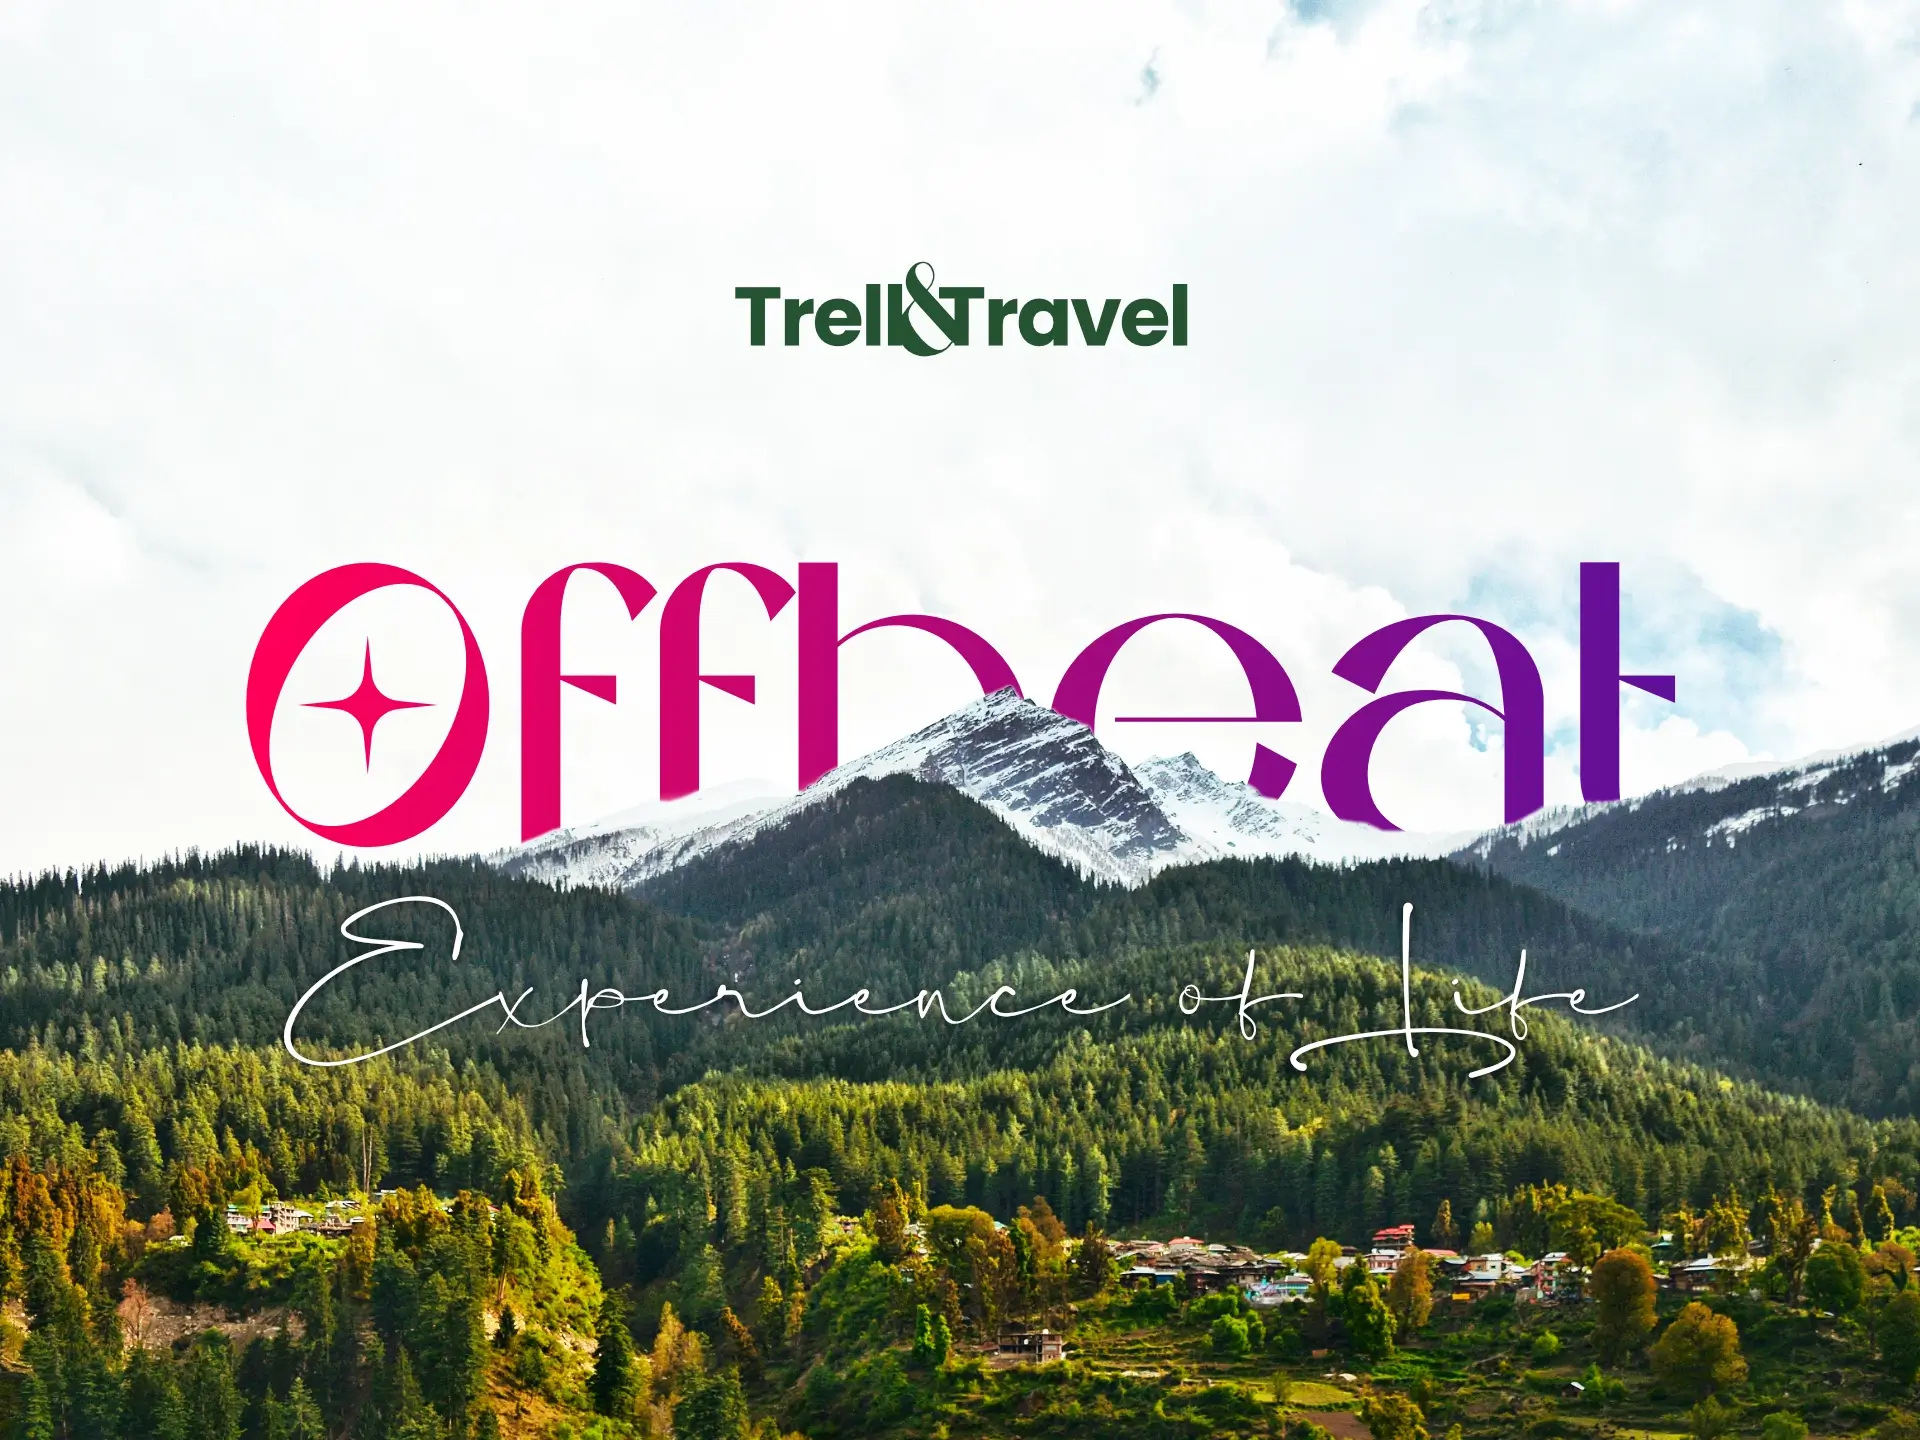 Trell & Travel